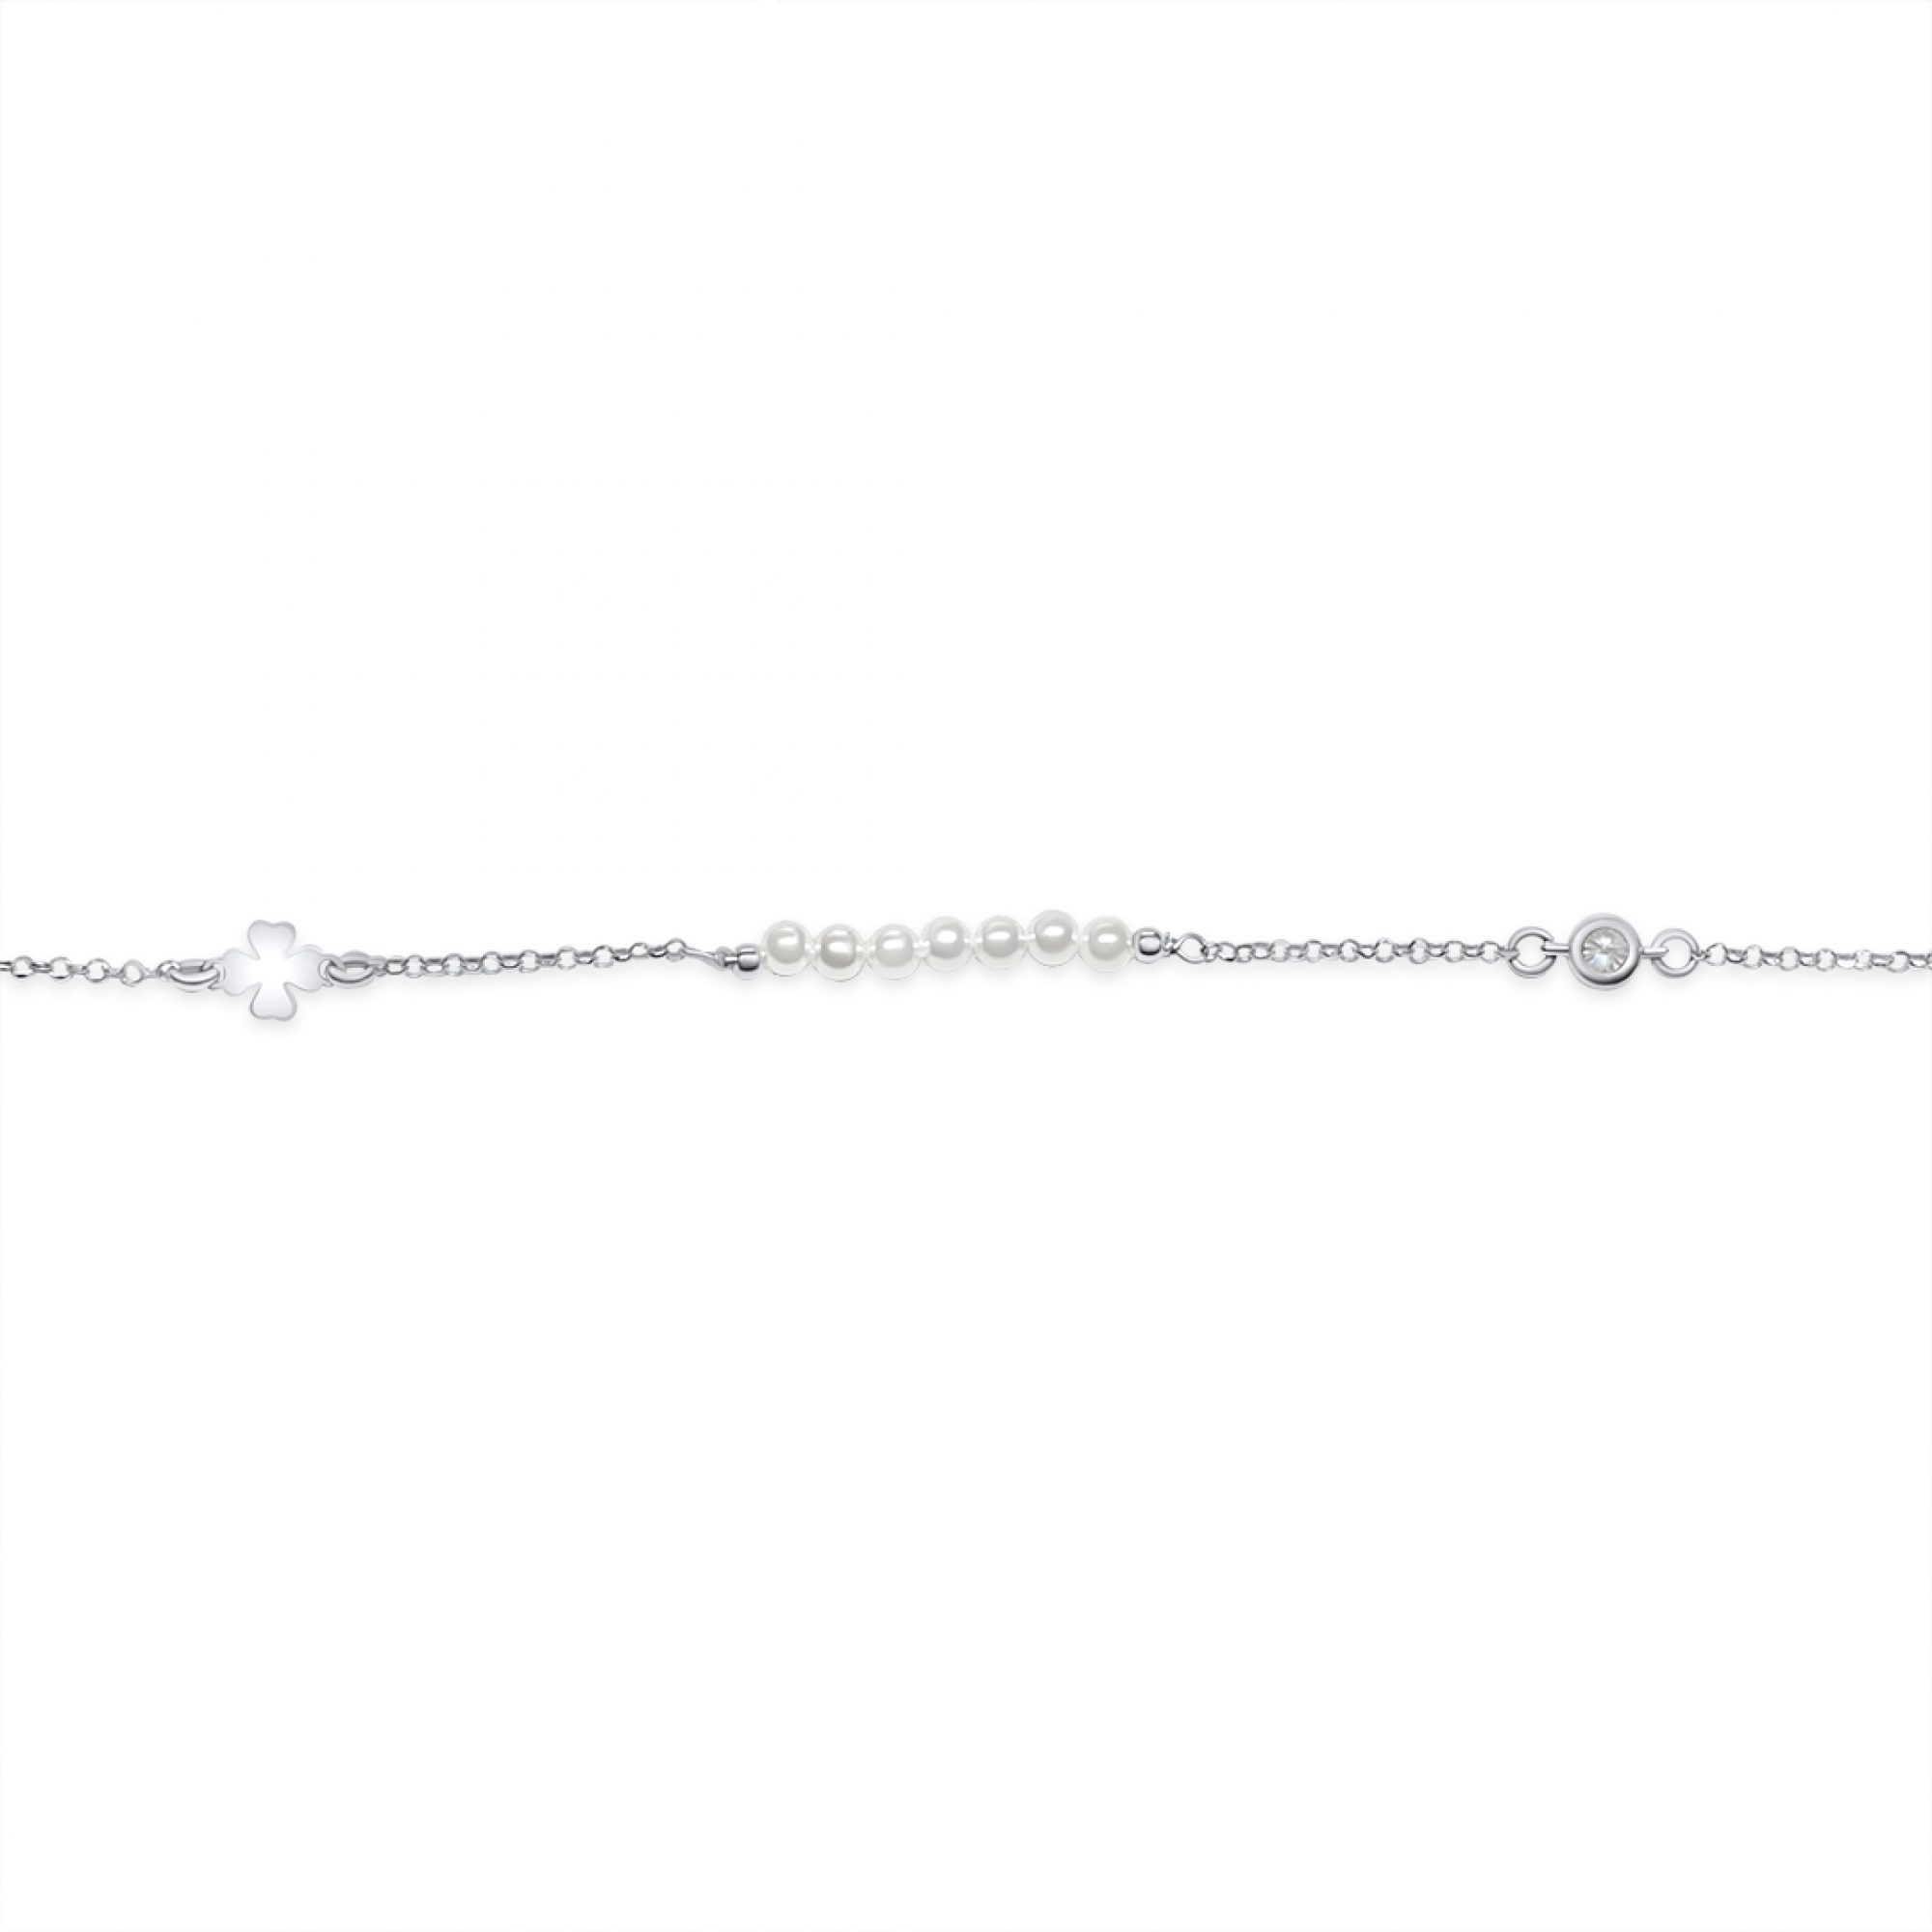 Bracelet with pearls and zircon stone